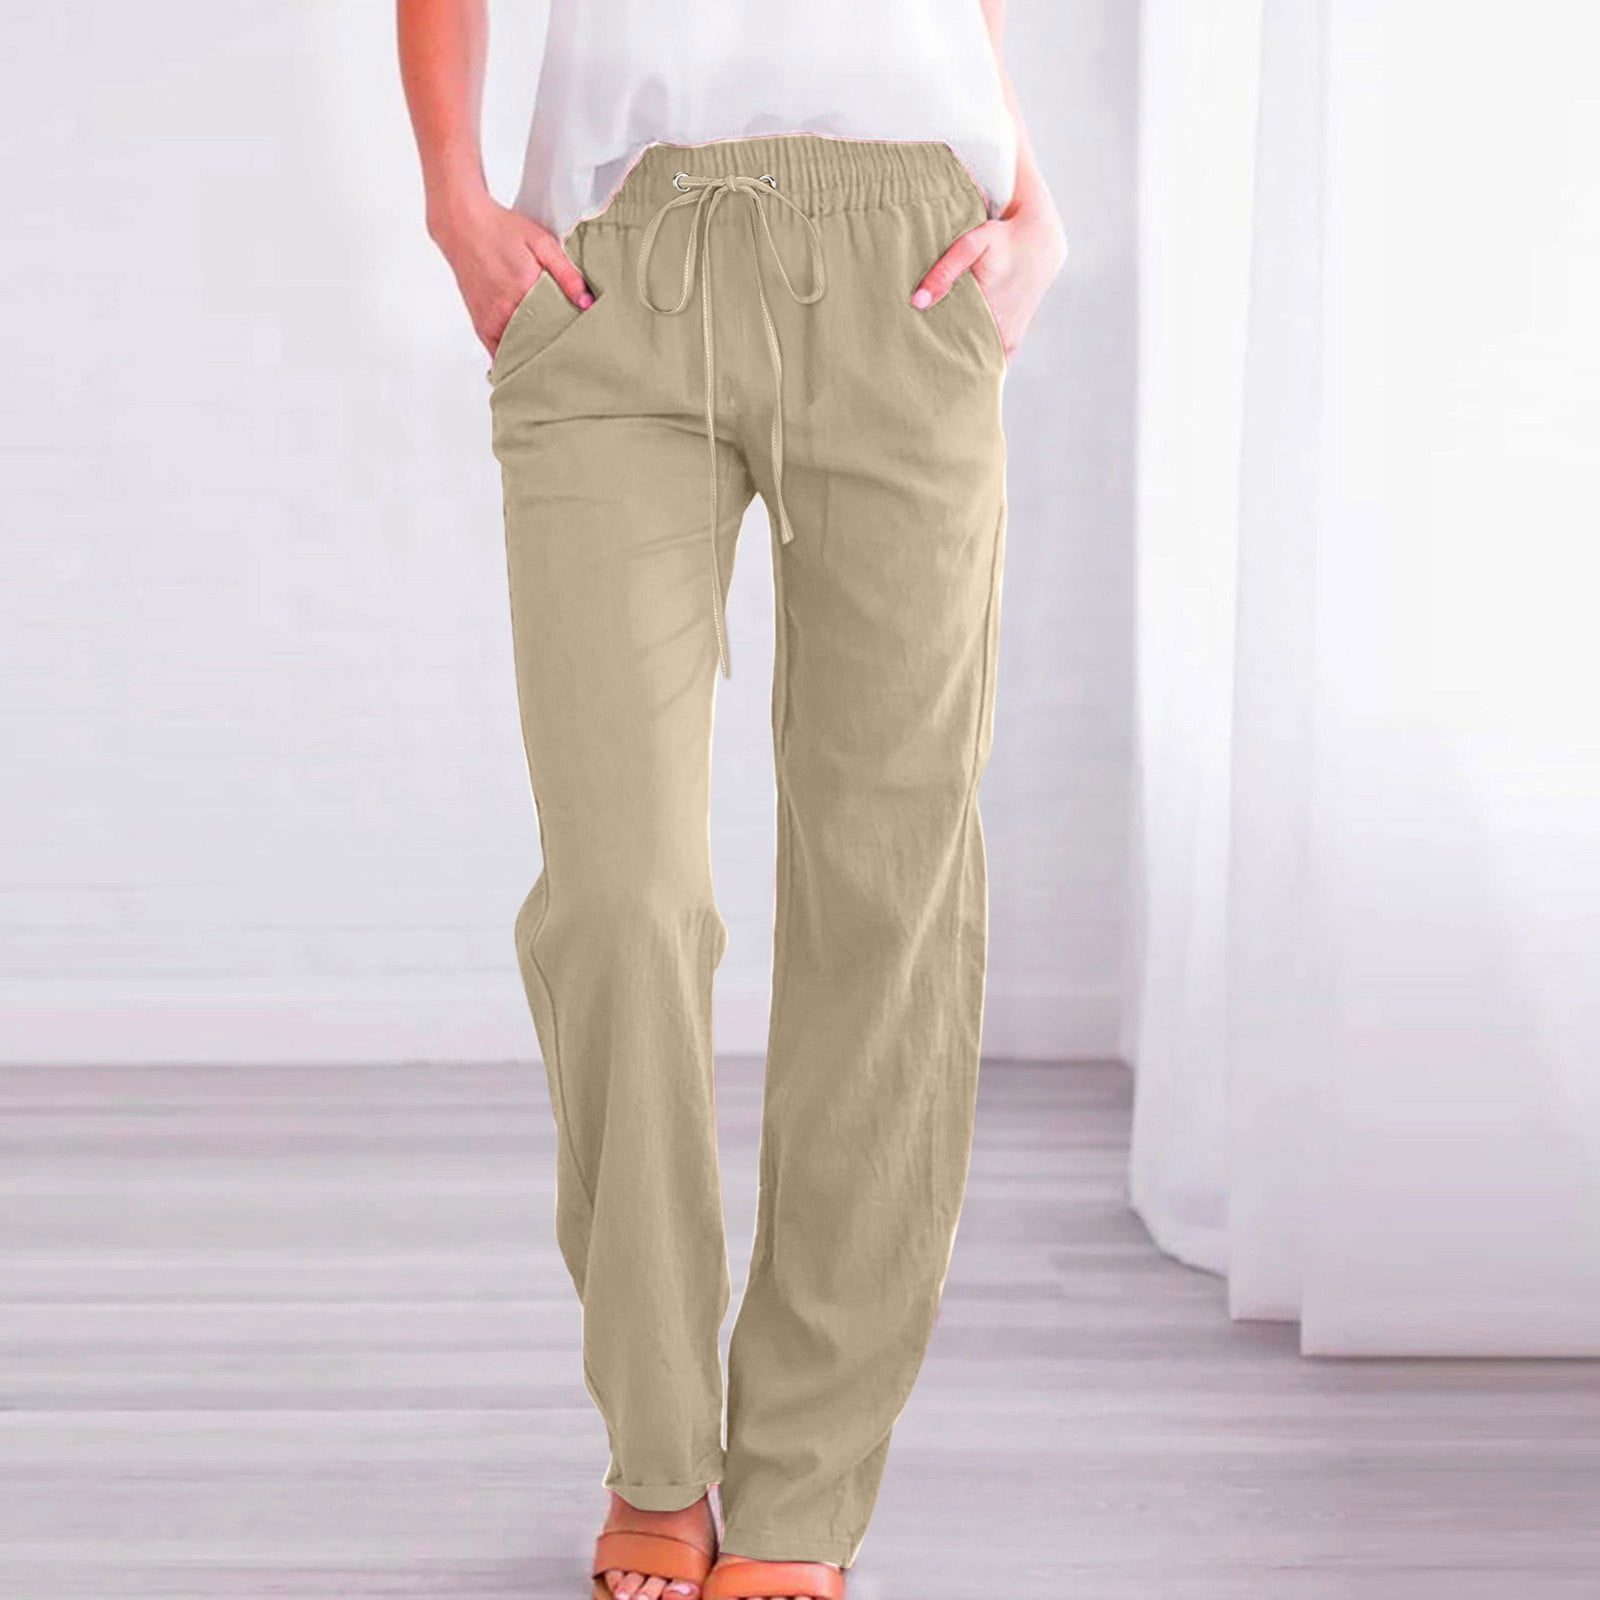 Buy cfzsyyw Womens Corduroy Casual Elastic Waist Loose Drawstring Pants  Trouser Brown L at Amazon.in